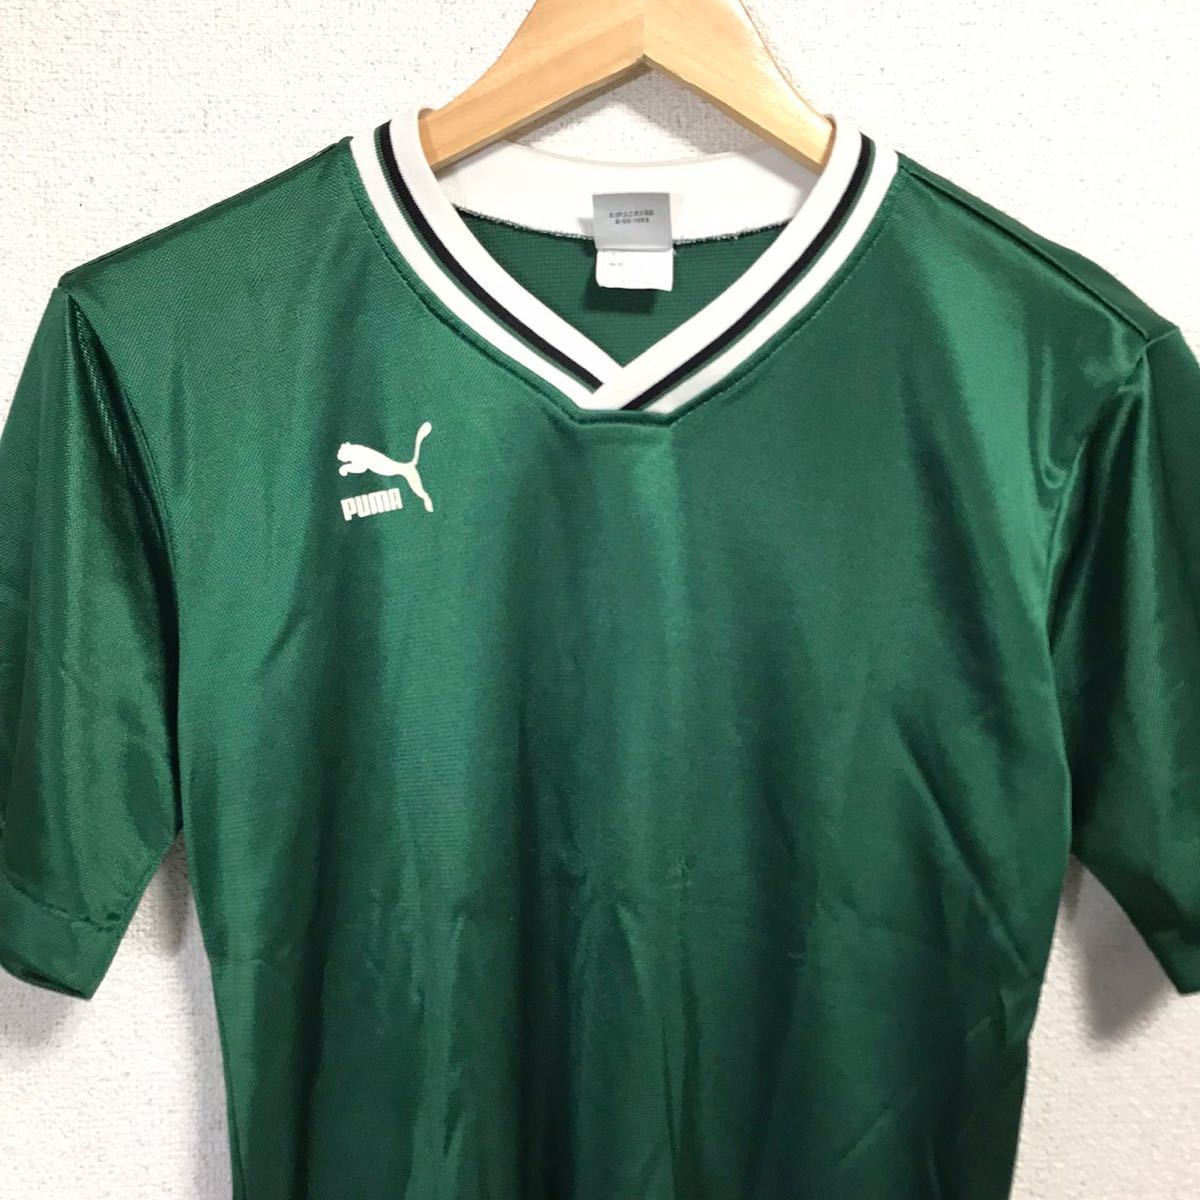 H1039dh made in Japan [PUMA Puma ] size 150 short sleeves uniform T-shirt Kids green sport wear soccer mesh Logo 